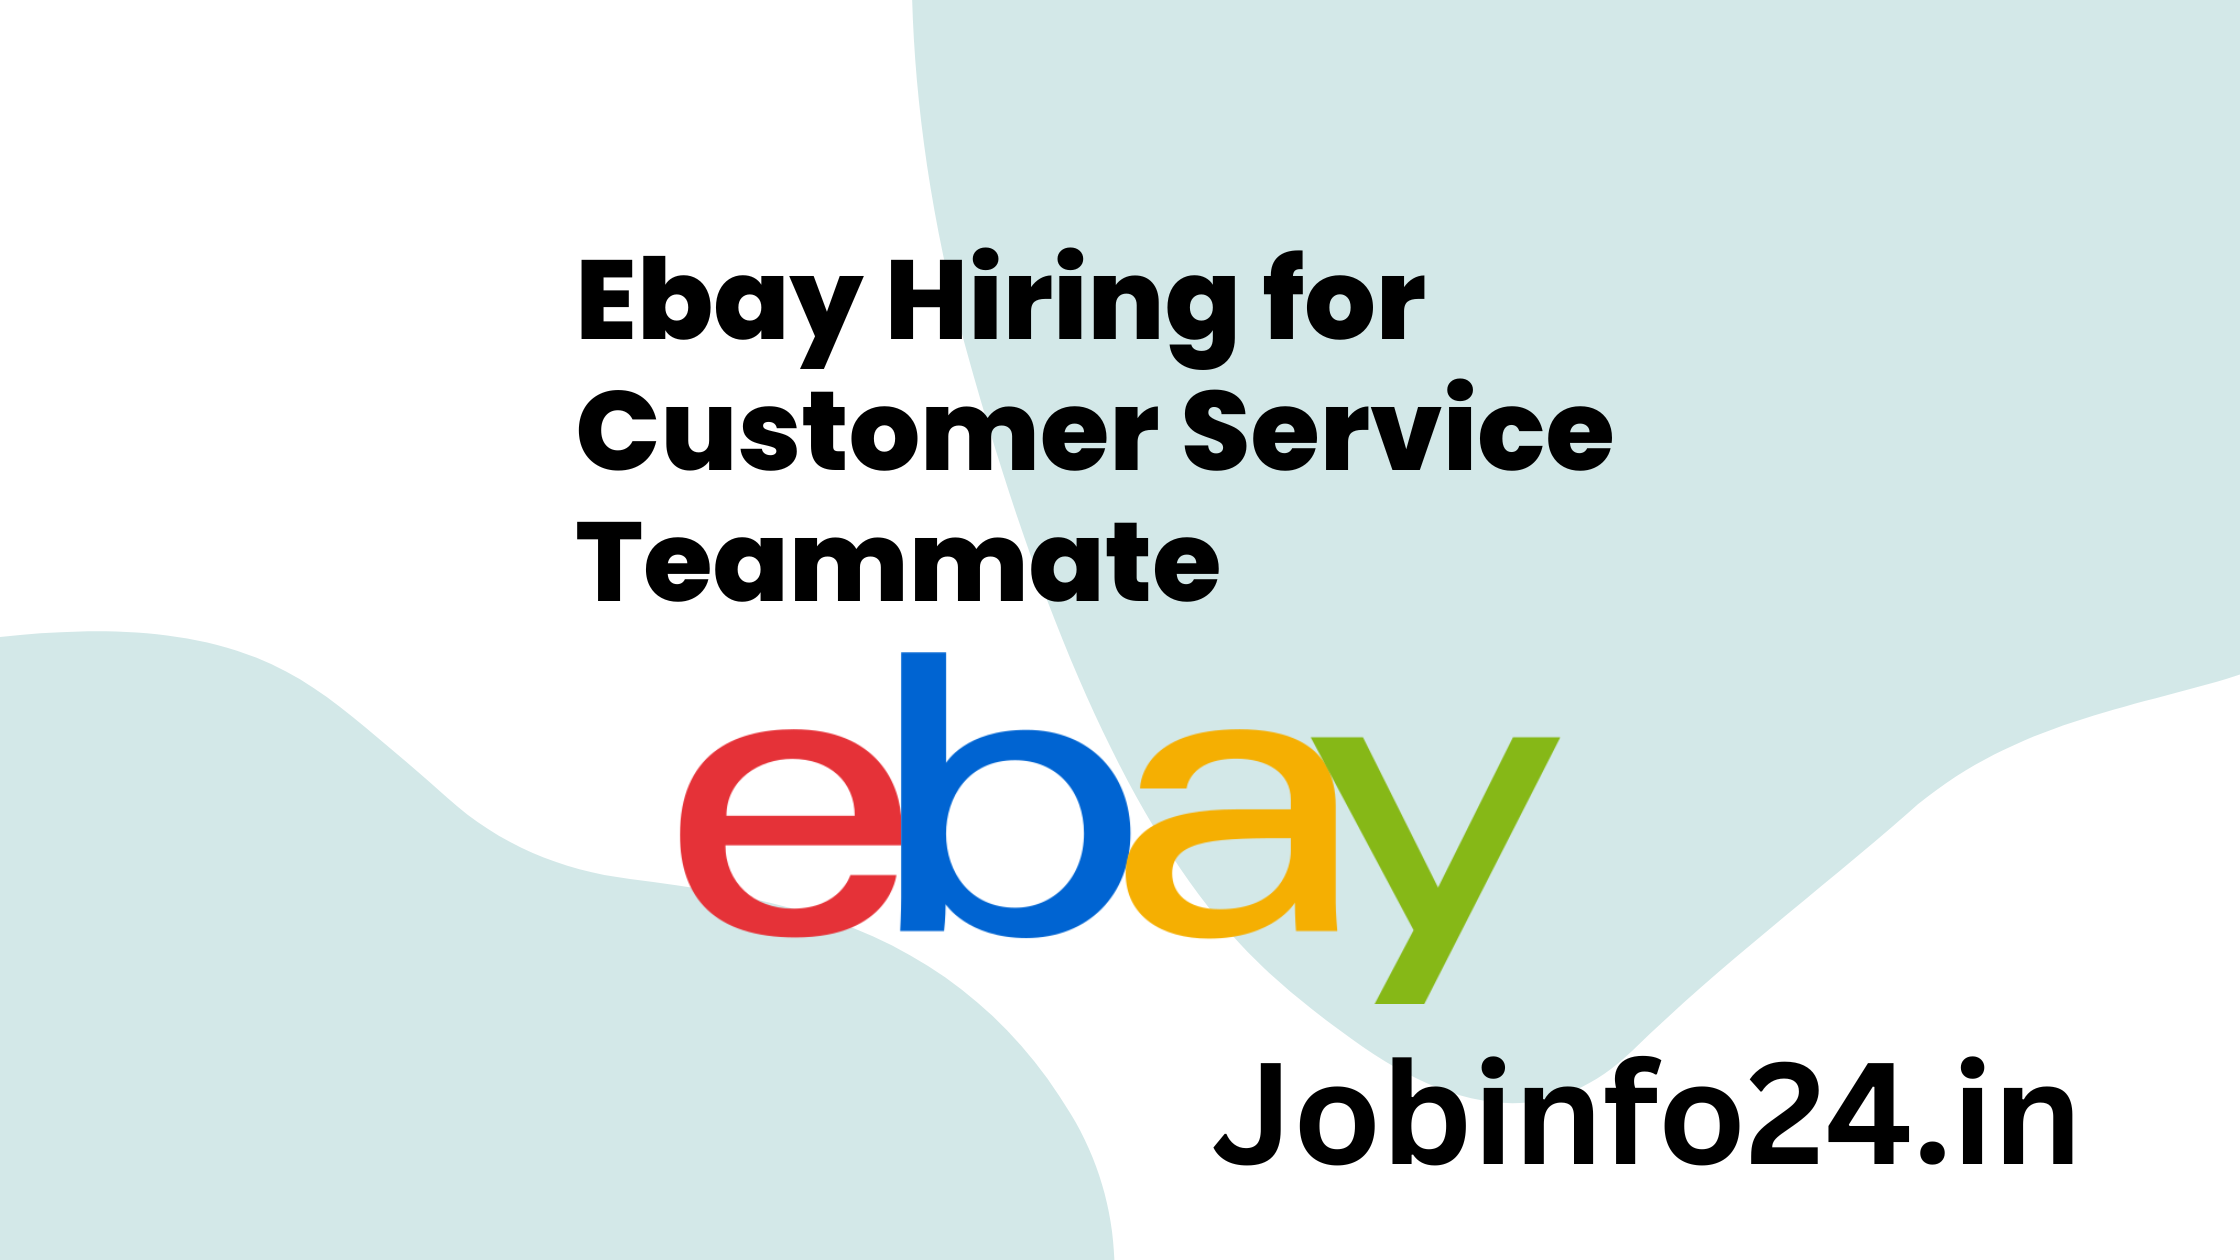 Ebay Hiring for Customer Service Teammate